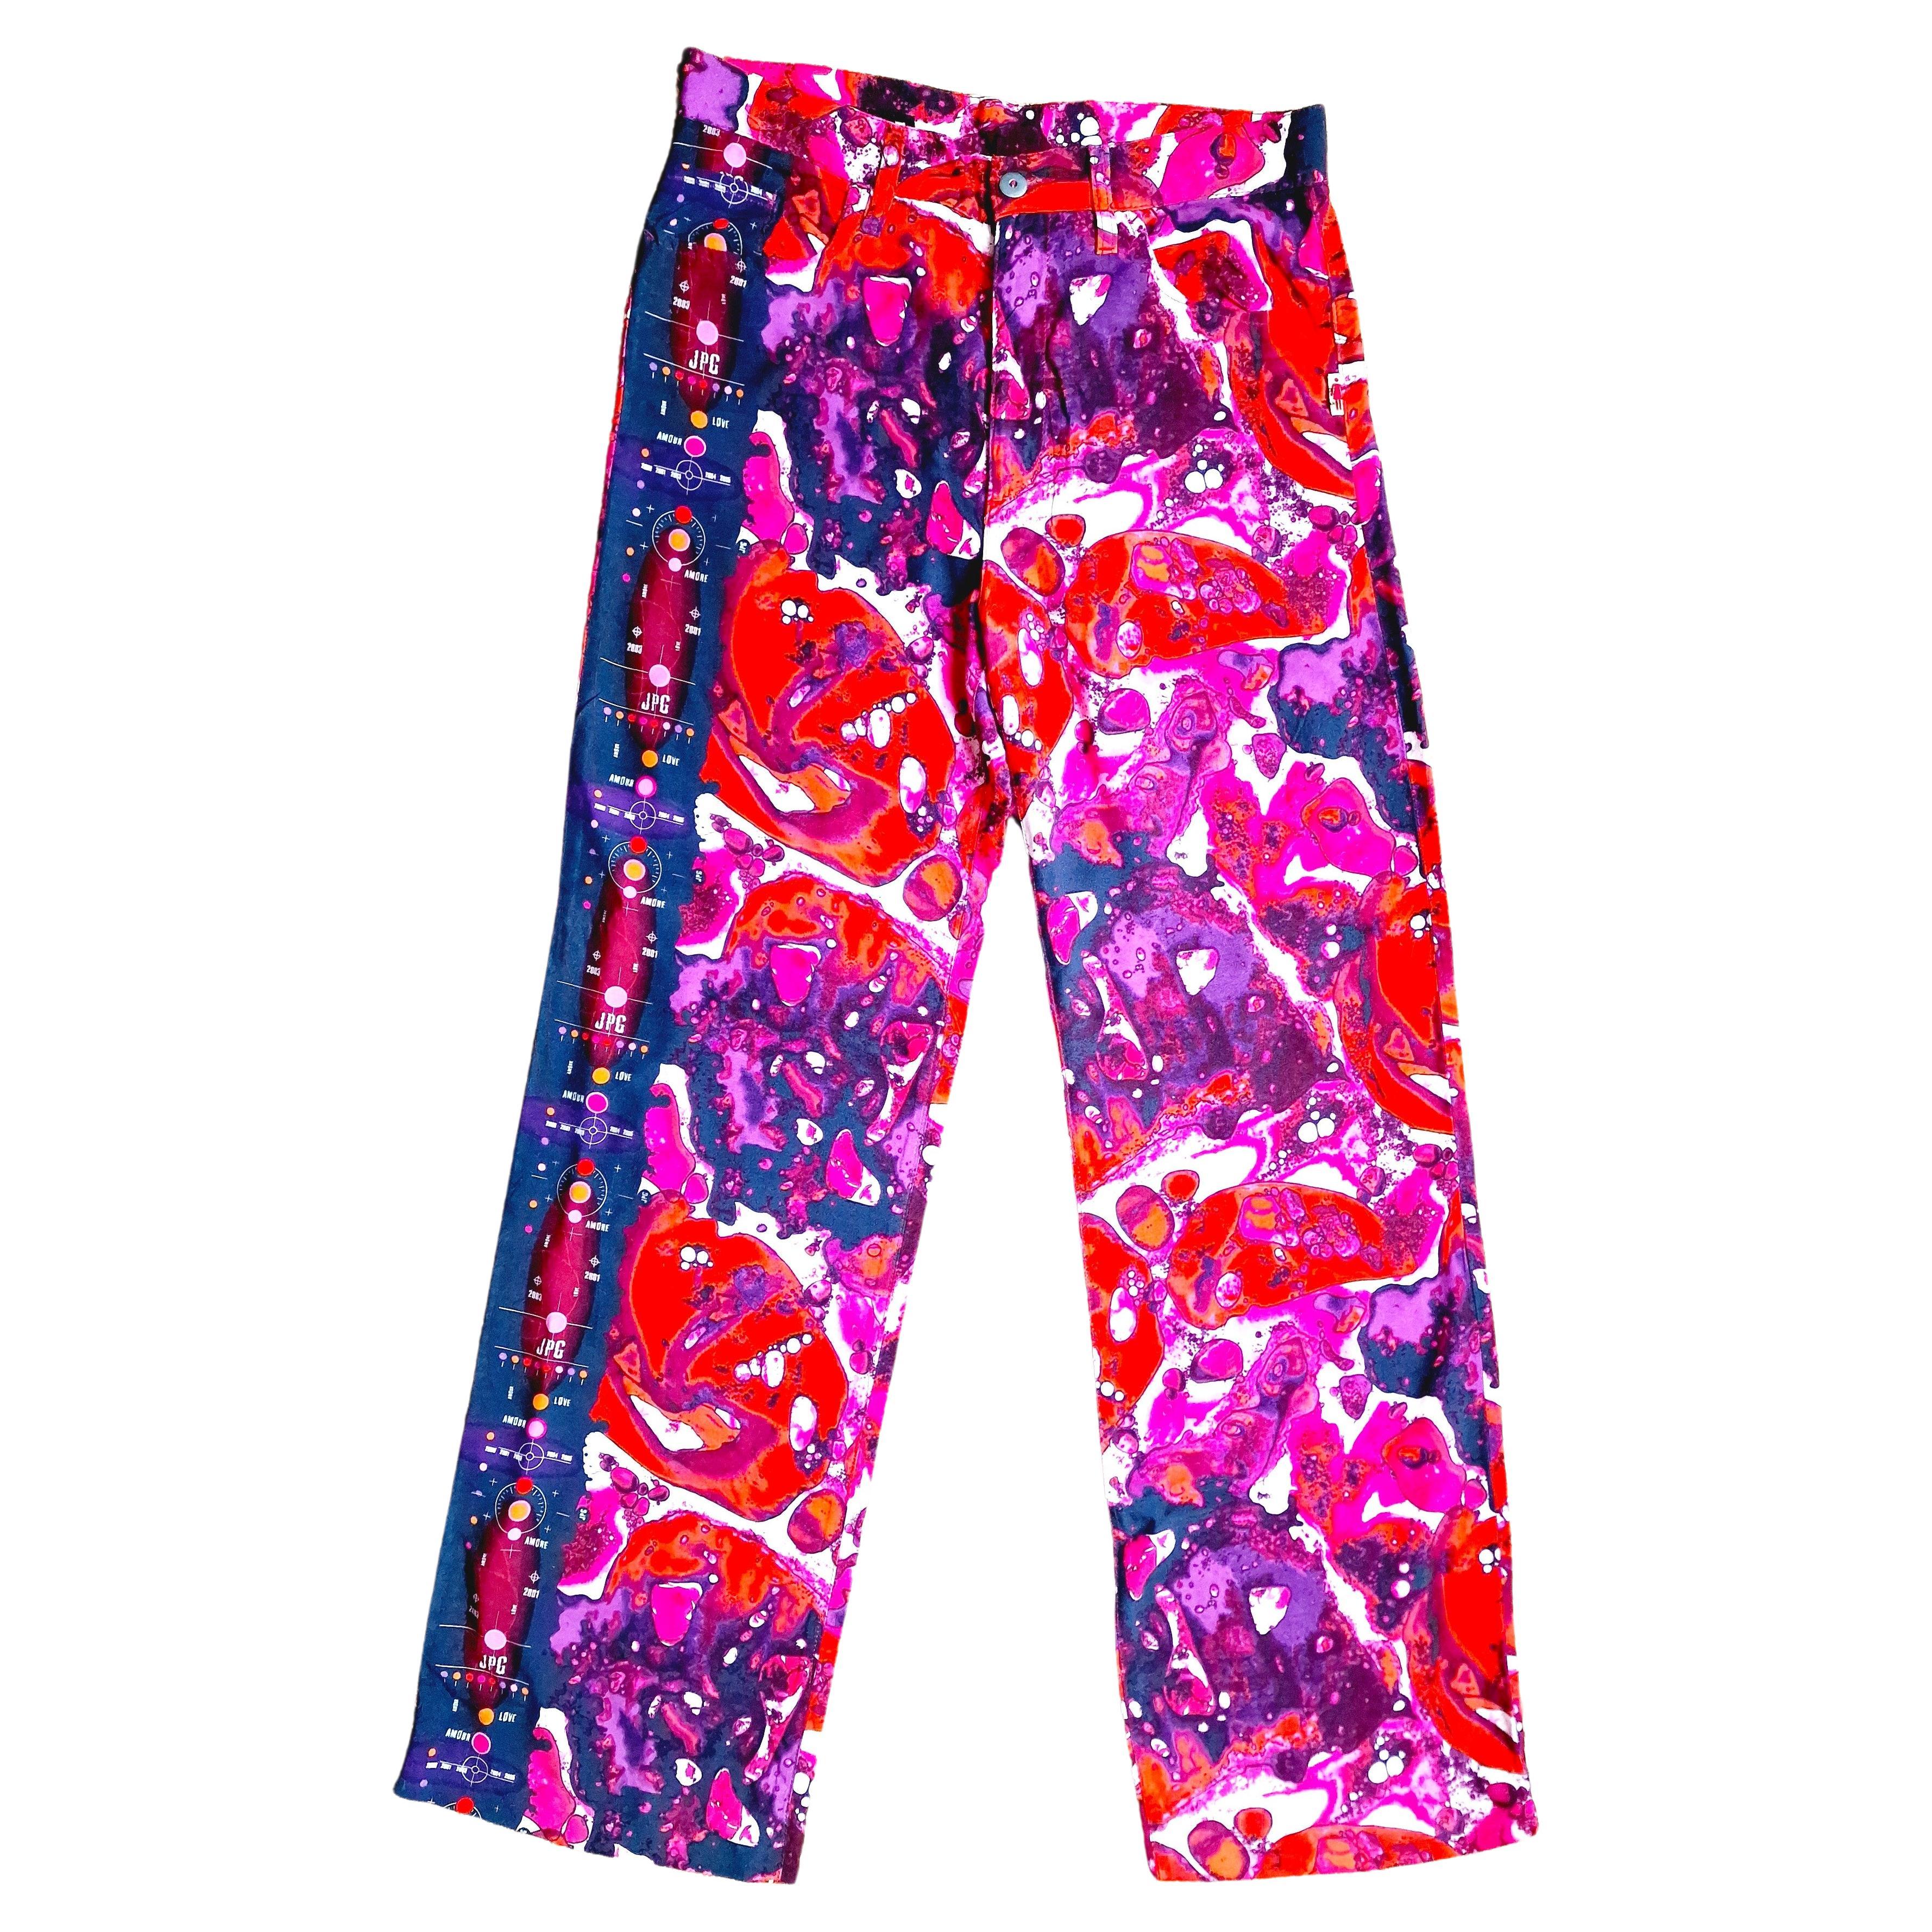 Jean Paul Gaultier Virus Bacteria Runway Pink JPG Jeans Men Women Trousers Pants For Sale